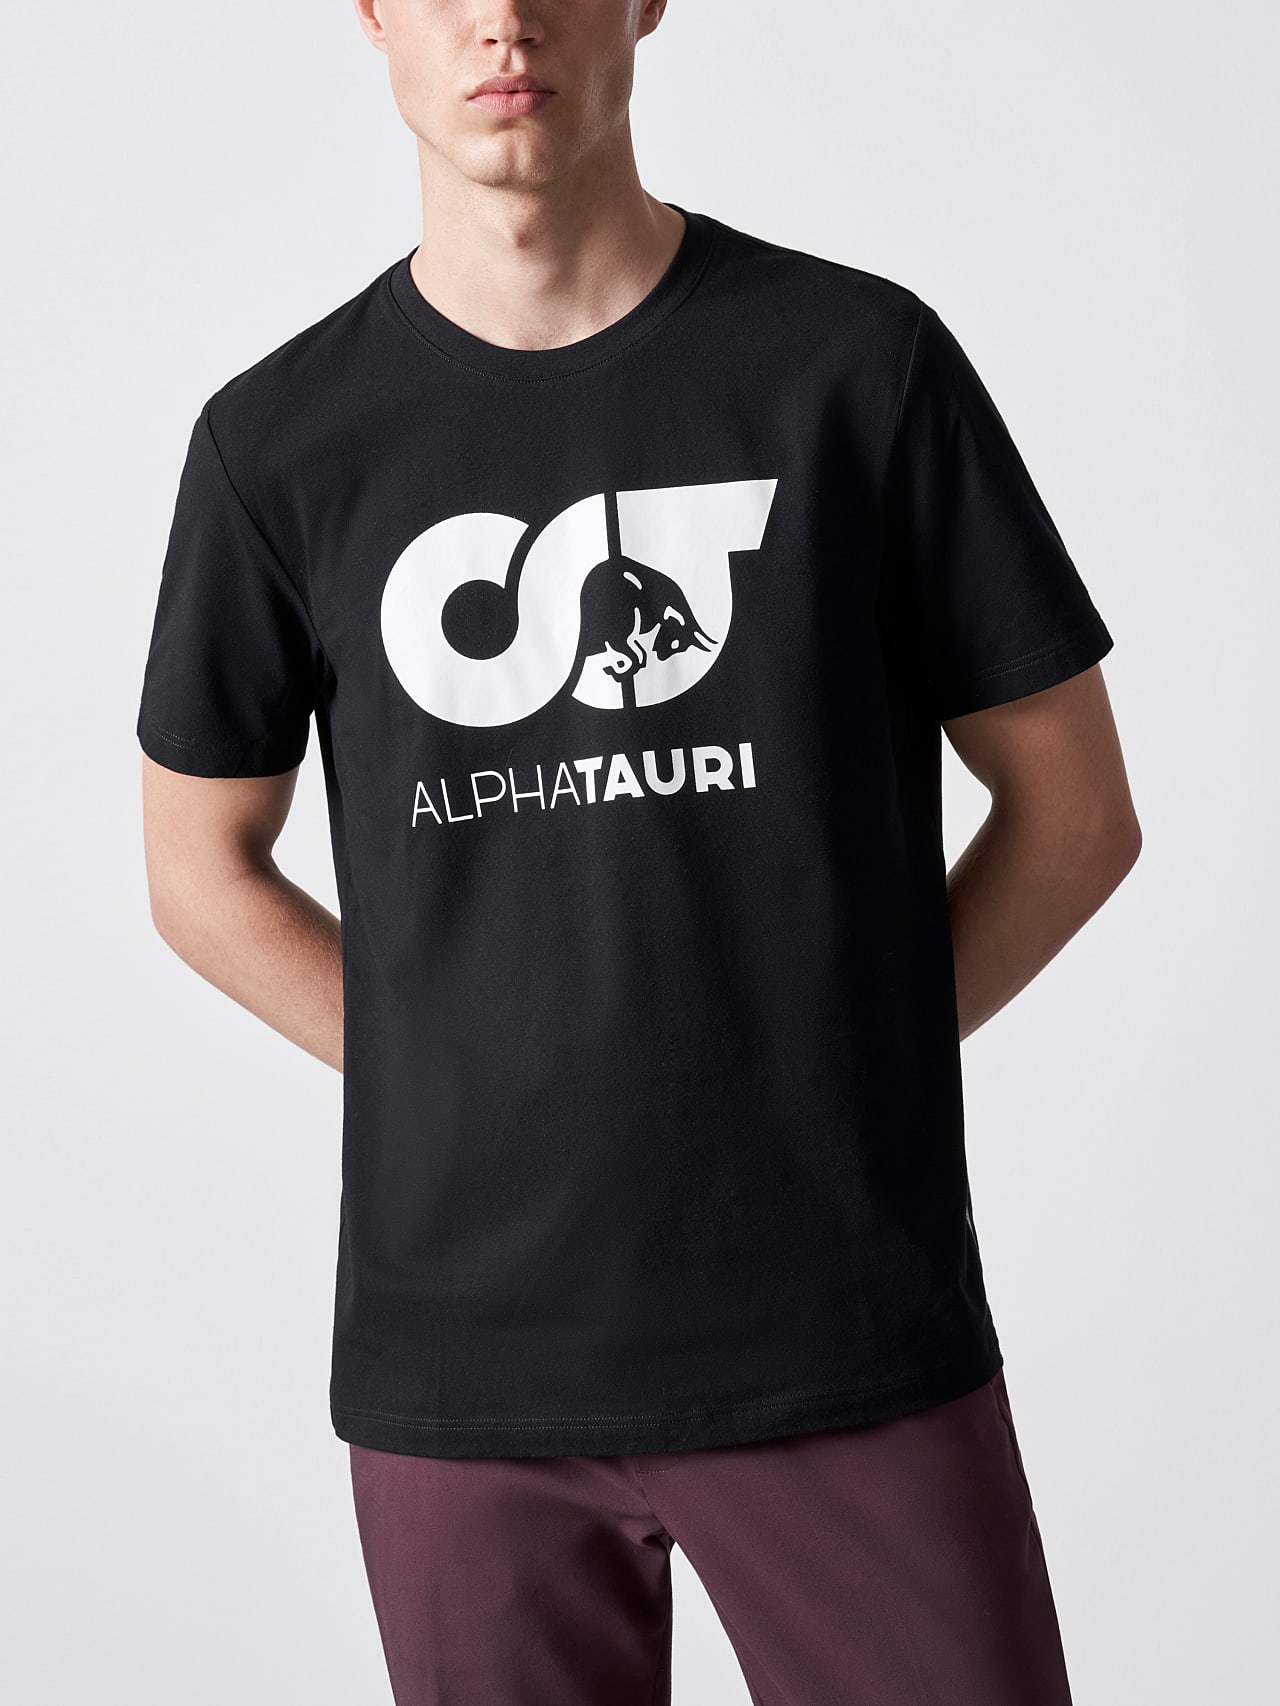 AlphaTauri | JERO V2.Y4.02 | Signature Logo T-Shirt in black for Men